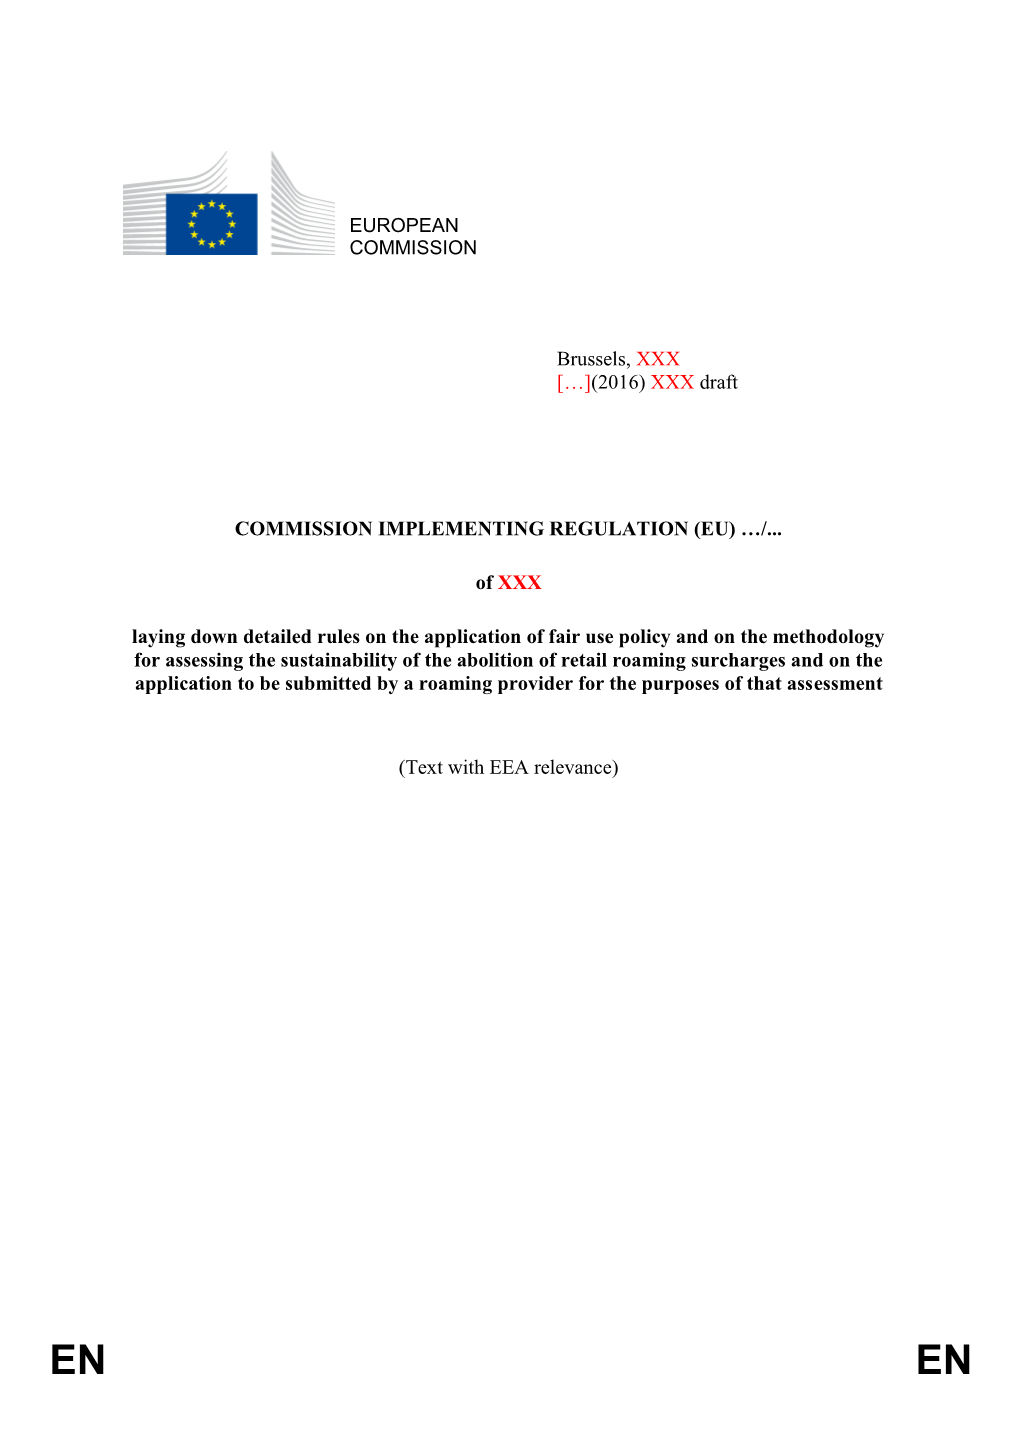 Commission Implementing Regulation (Eu)